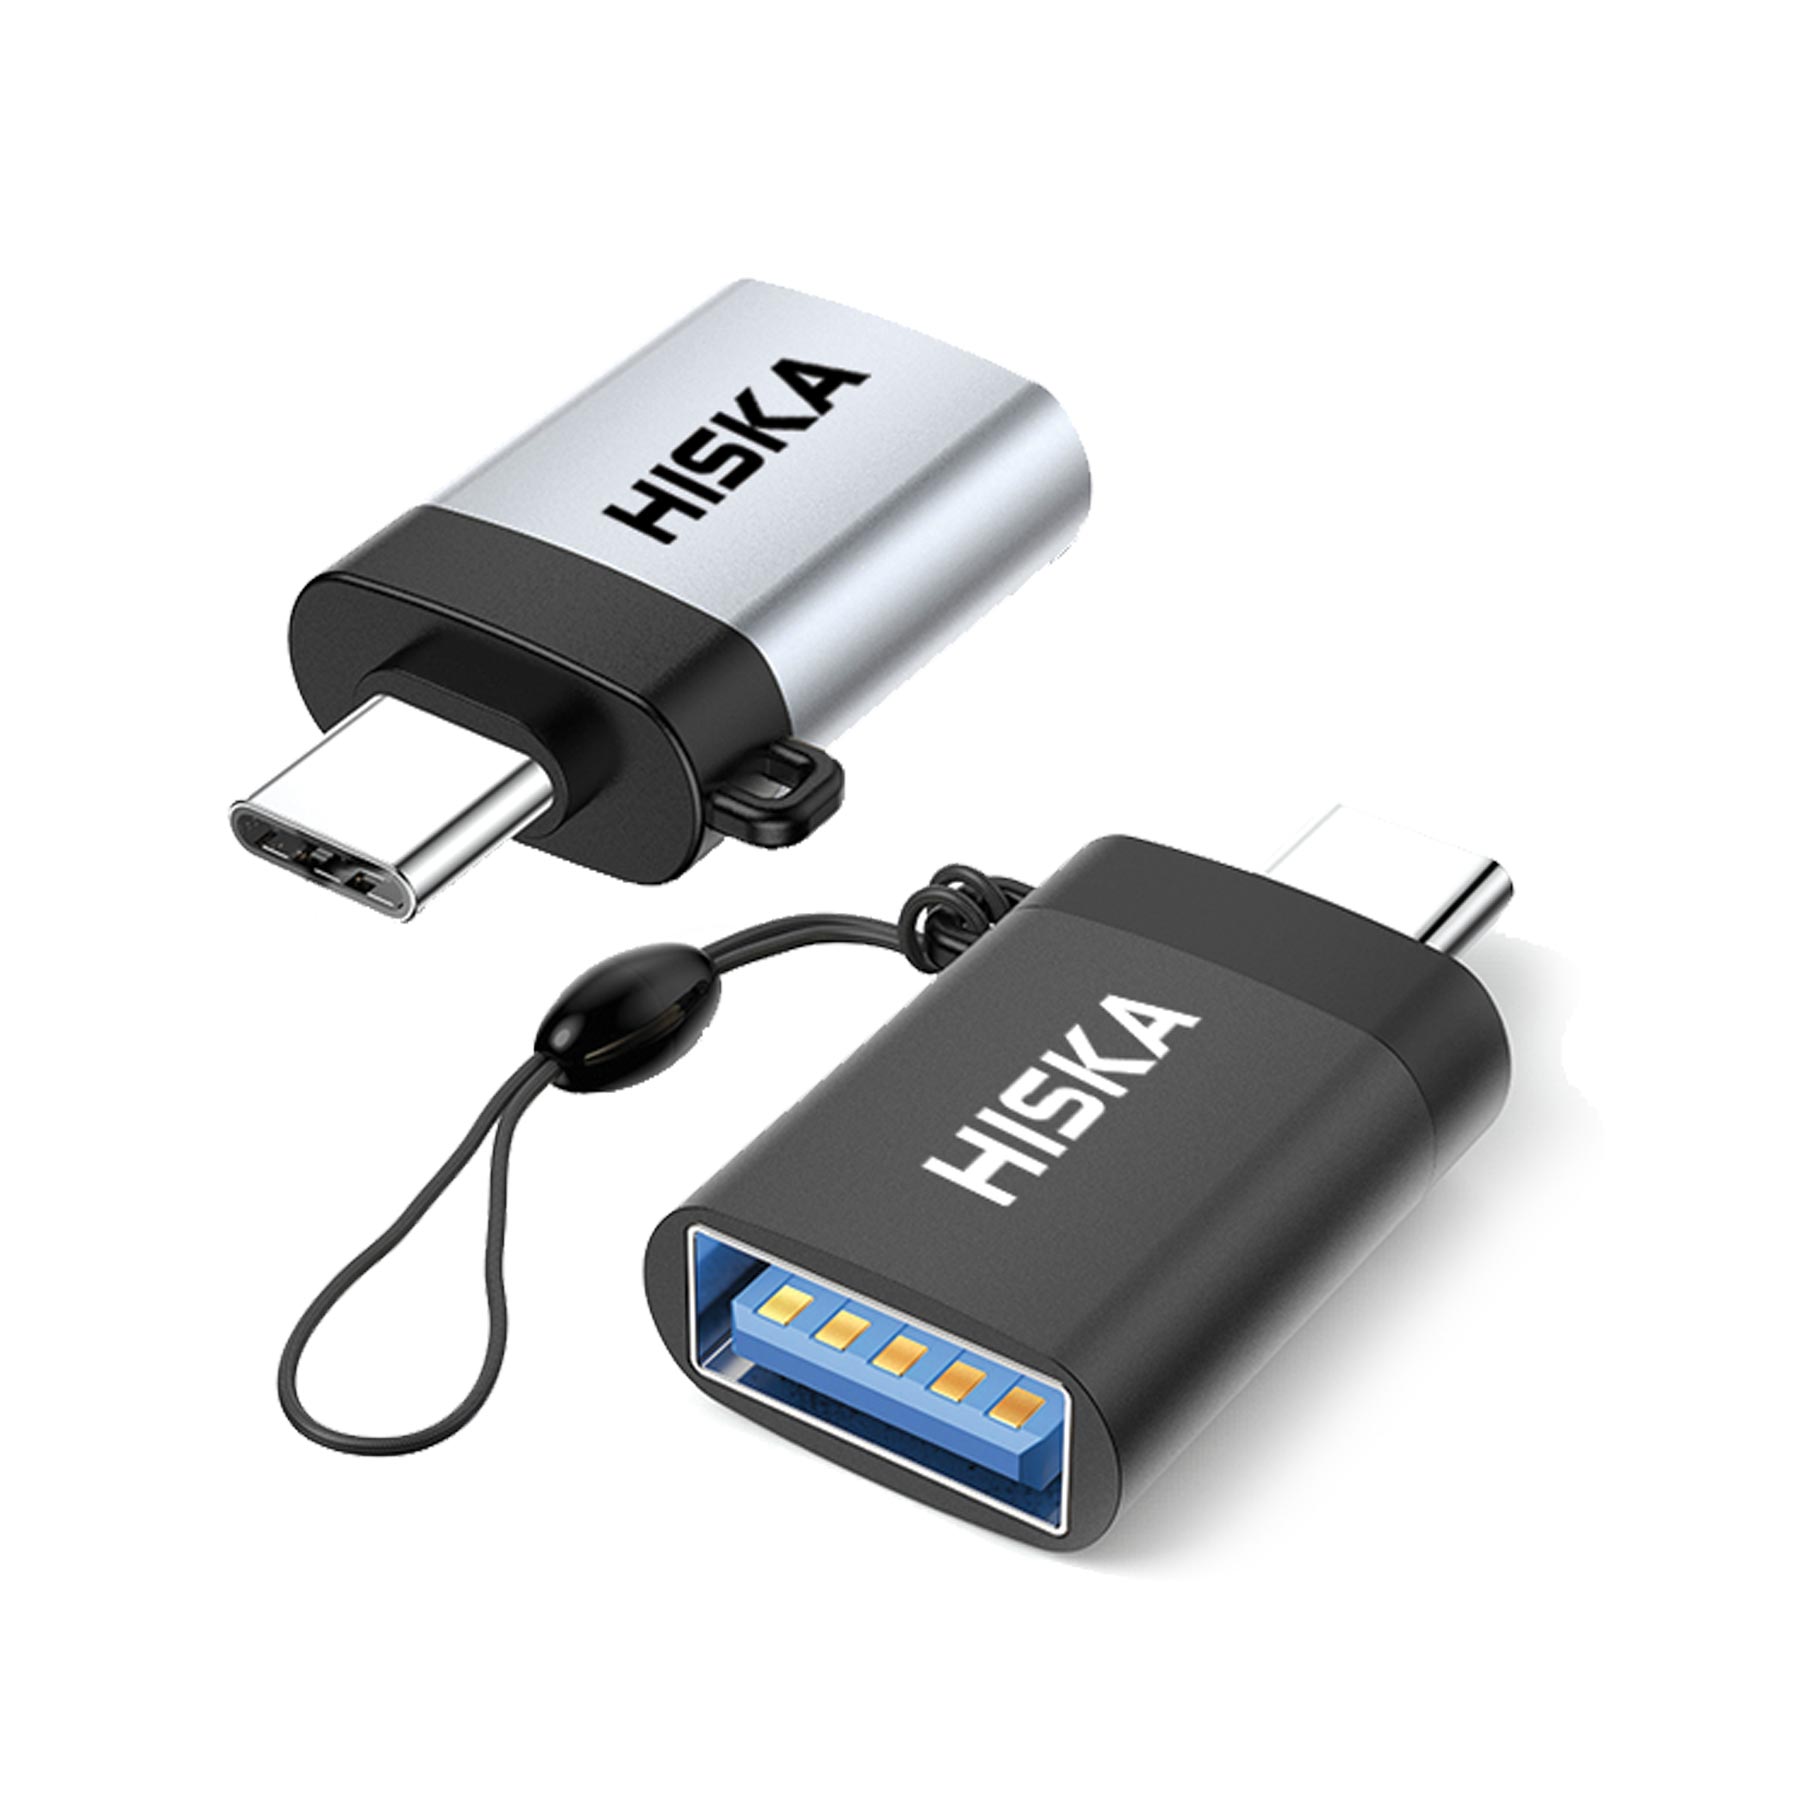 GHR-04 converter USB To Type-C Model OT-04